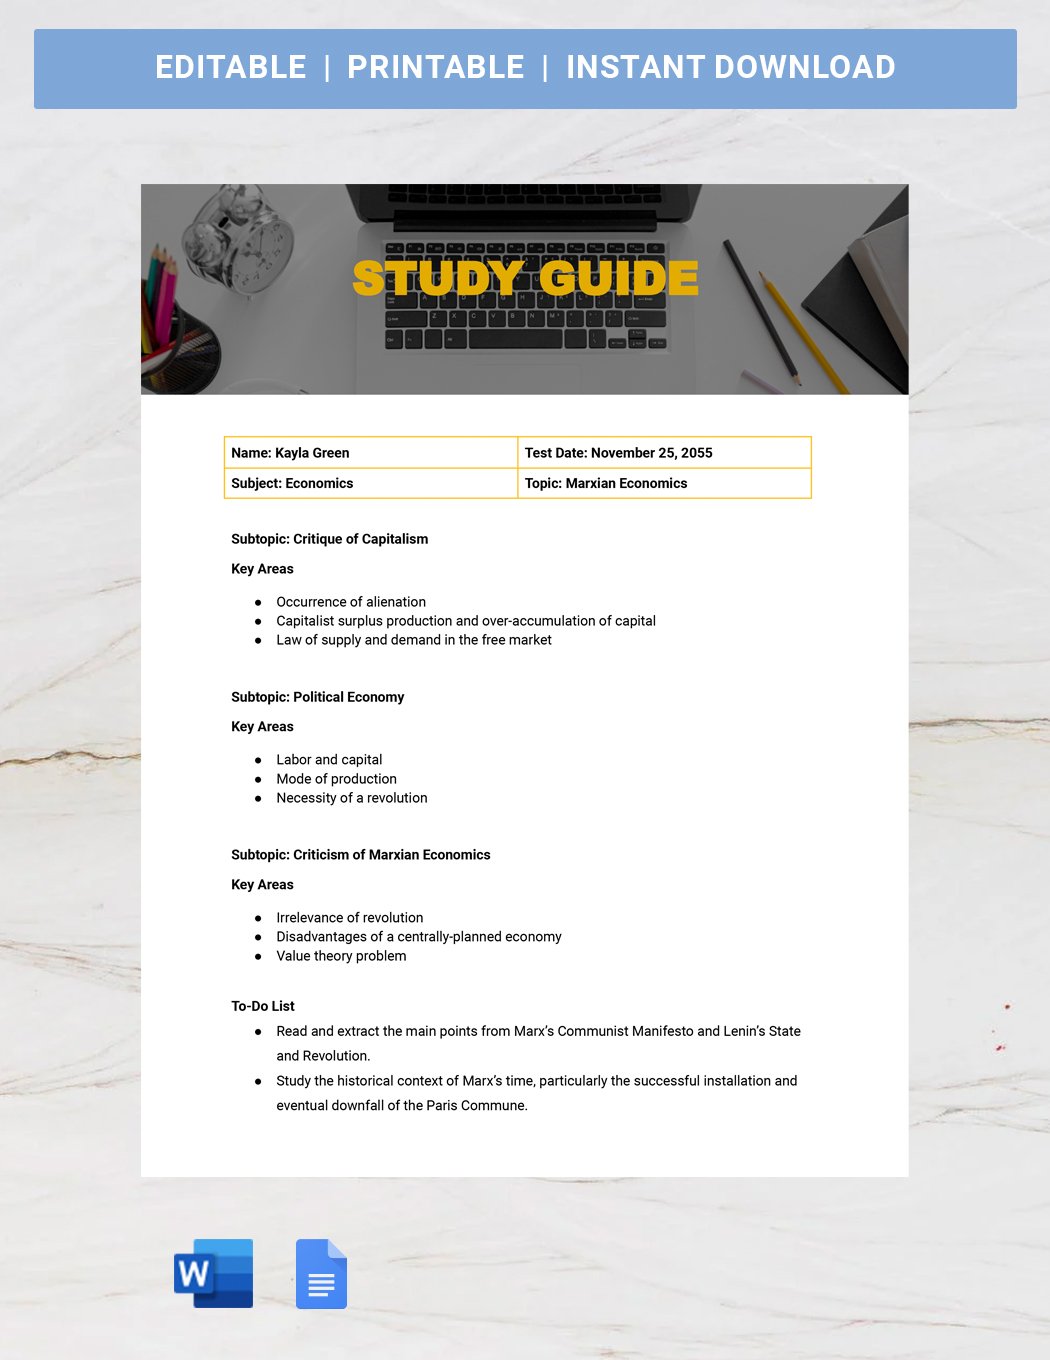 Study Guide Template Google Docs